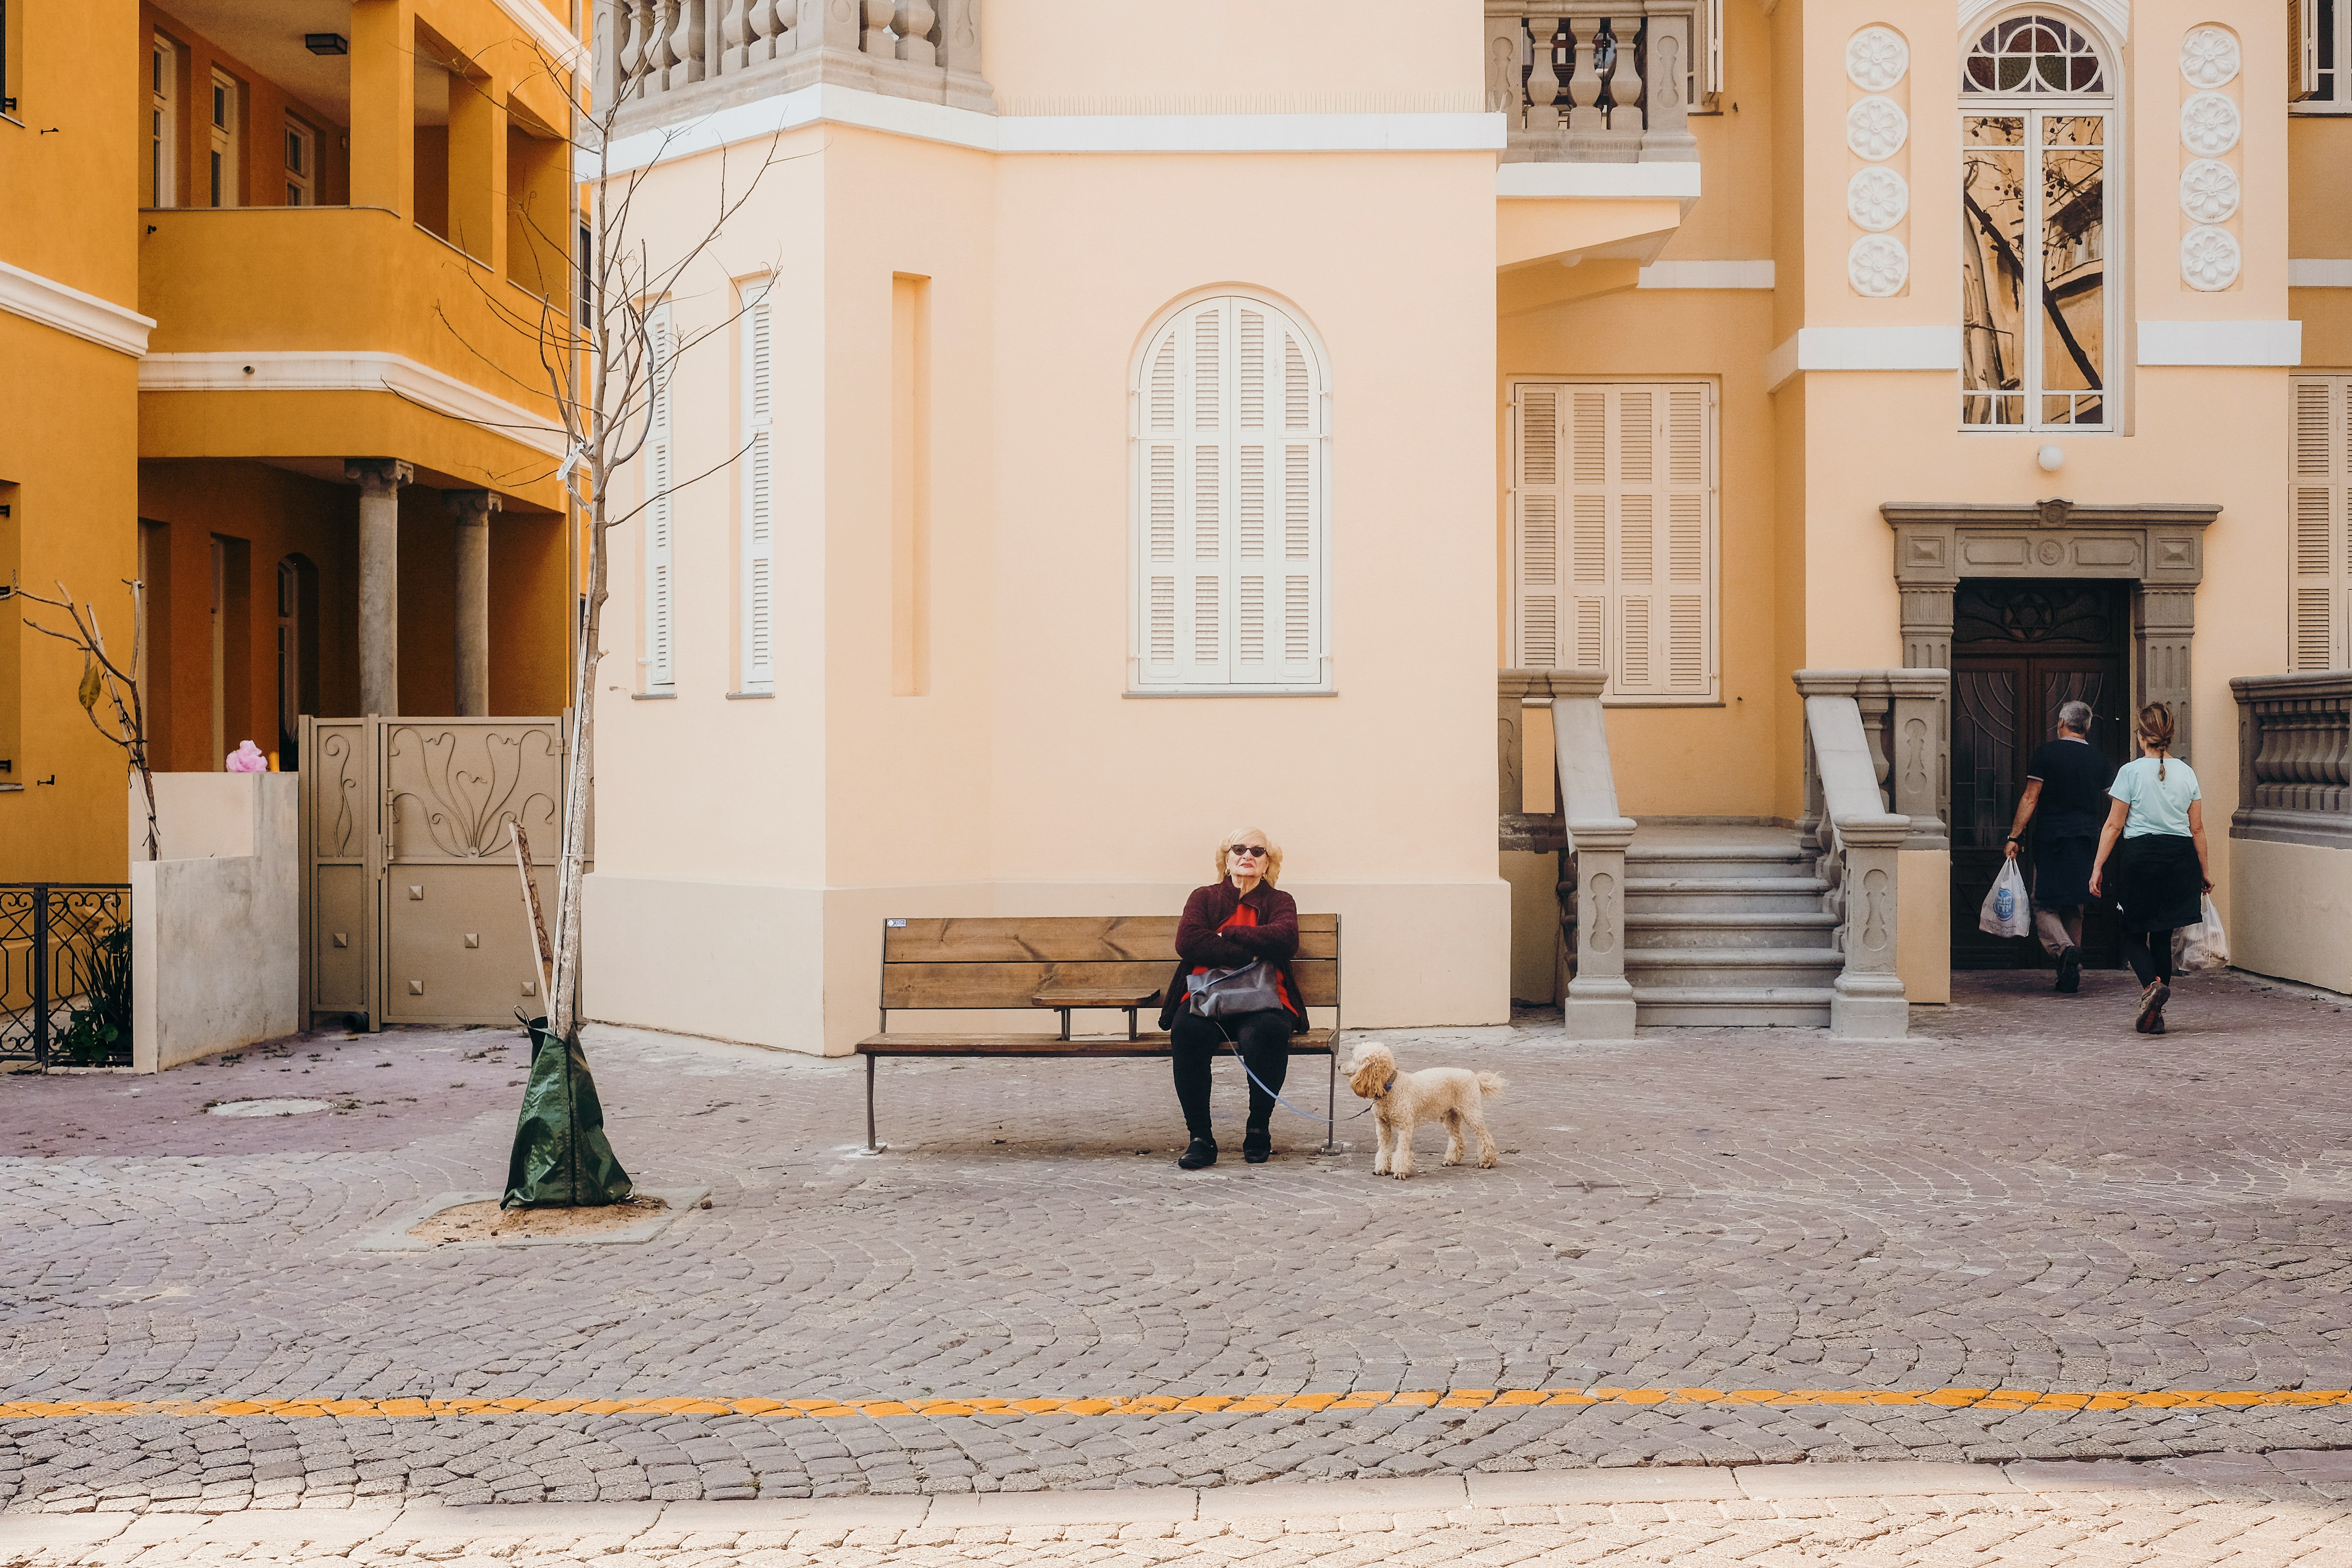 man in blue jacket sitting on bench beside white dog during daytime